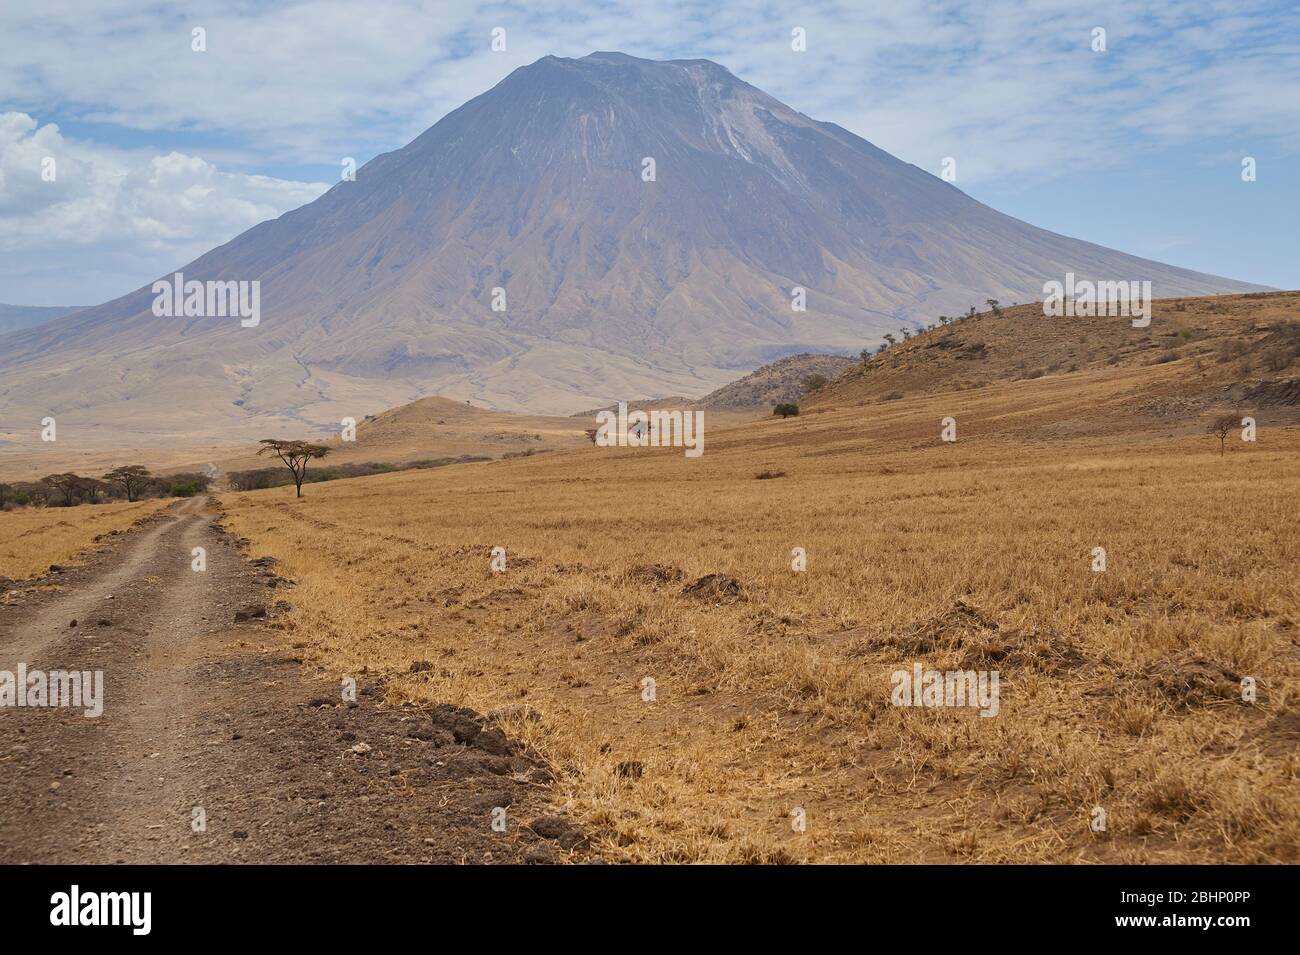 The volcano Oldoinyo Lengai, seen from the Kitumbeine - Engaresero road on the Gilei plains Stock Photo